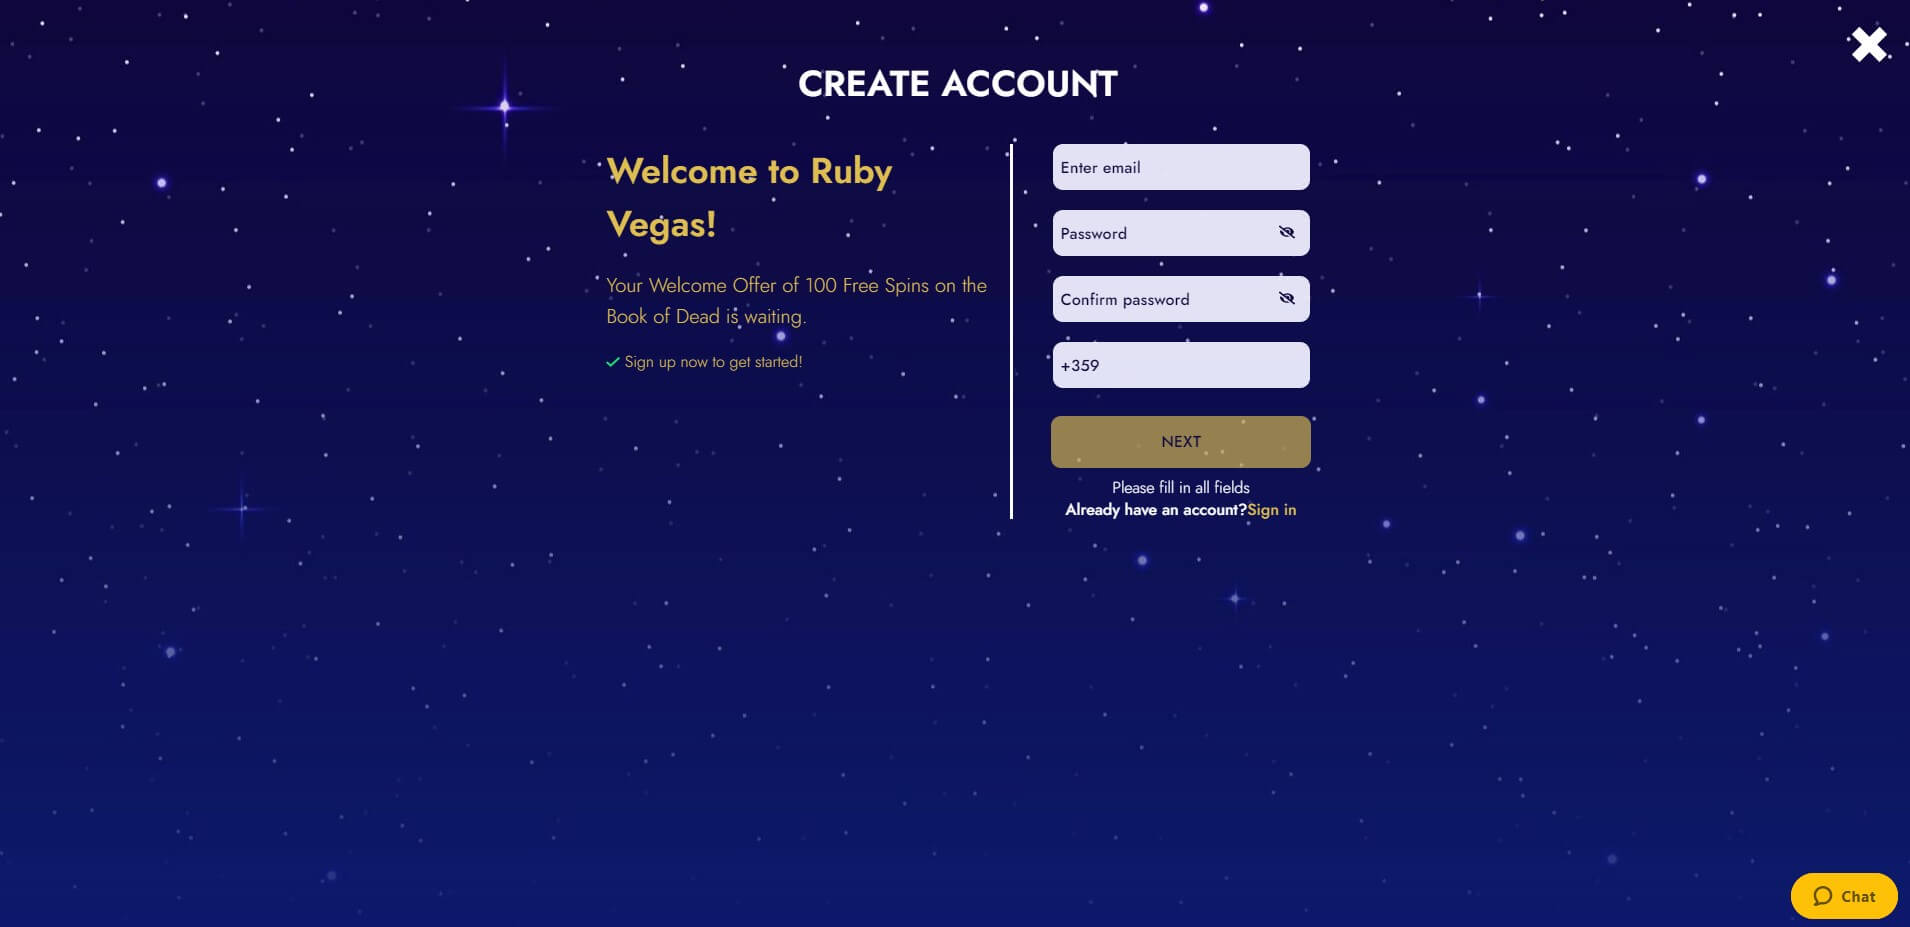 Rubby Vegas Casino Registrations